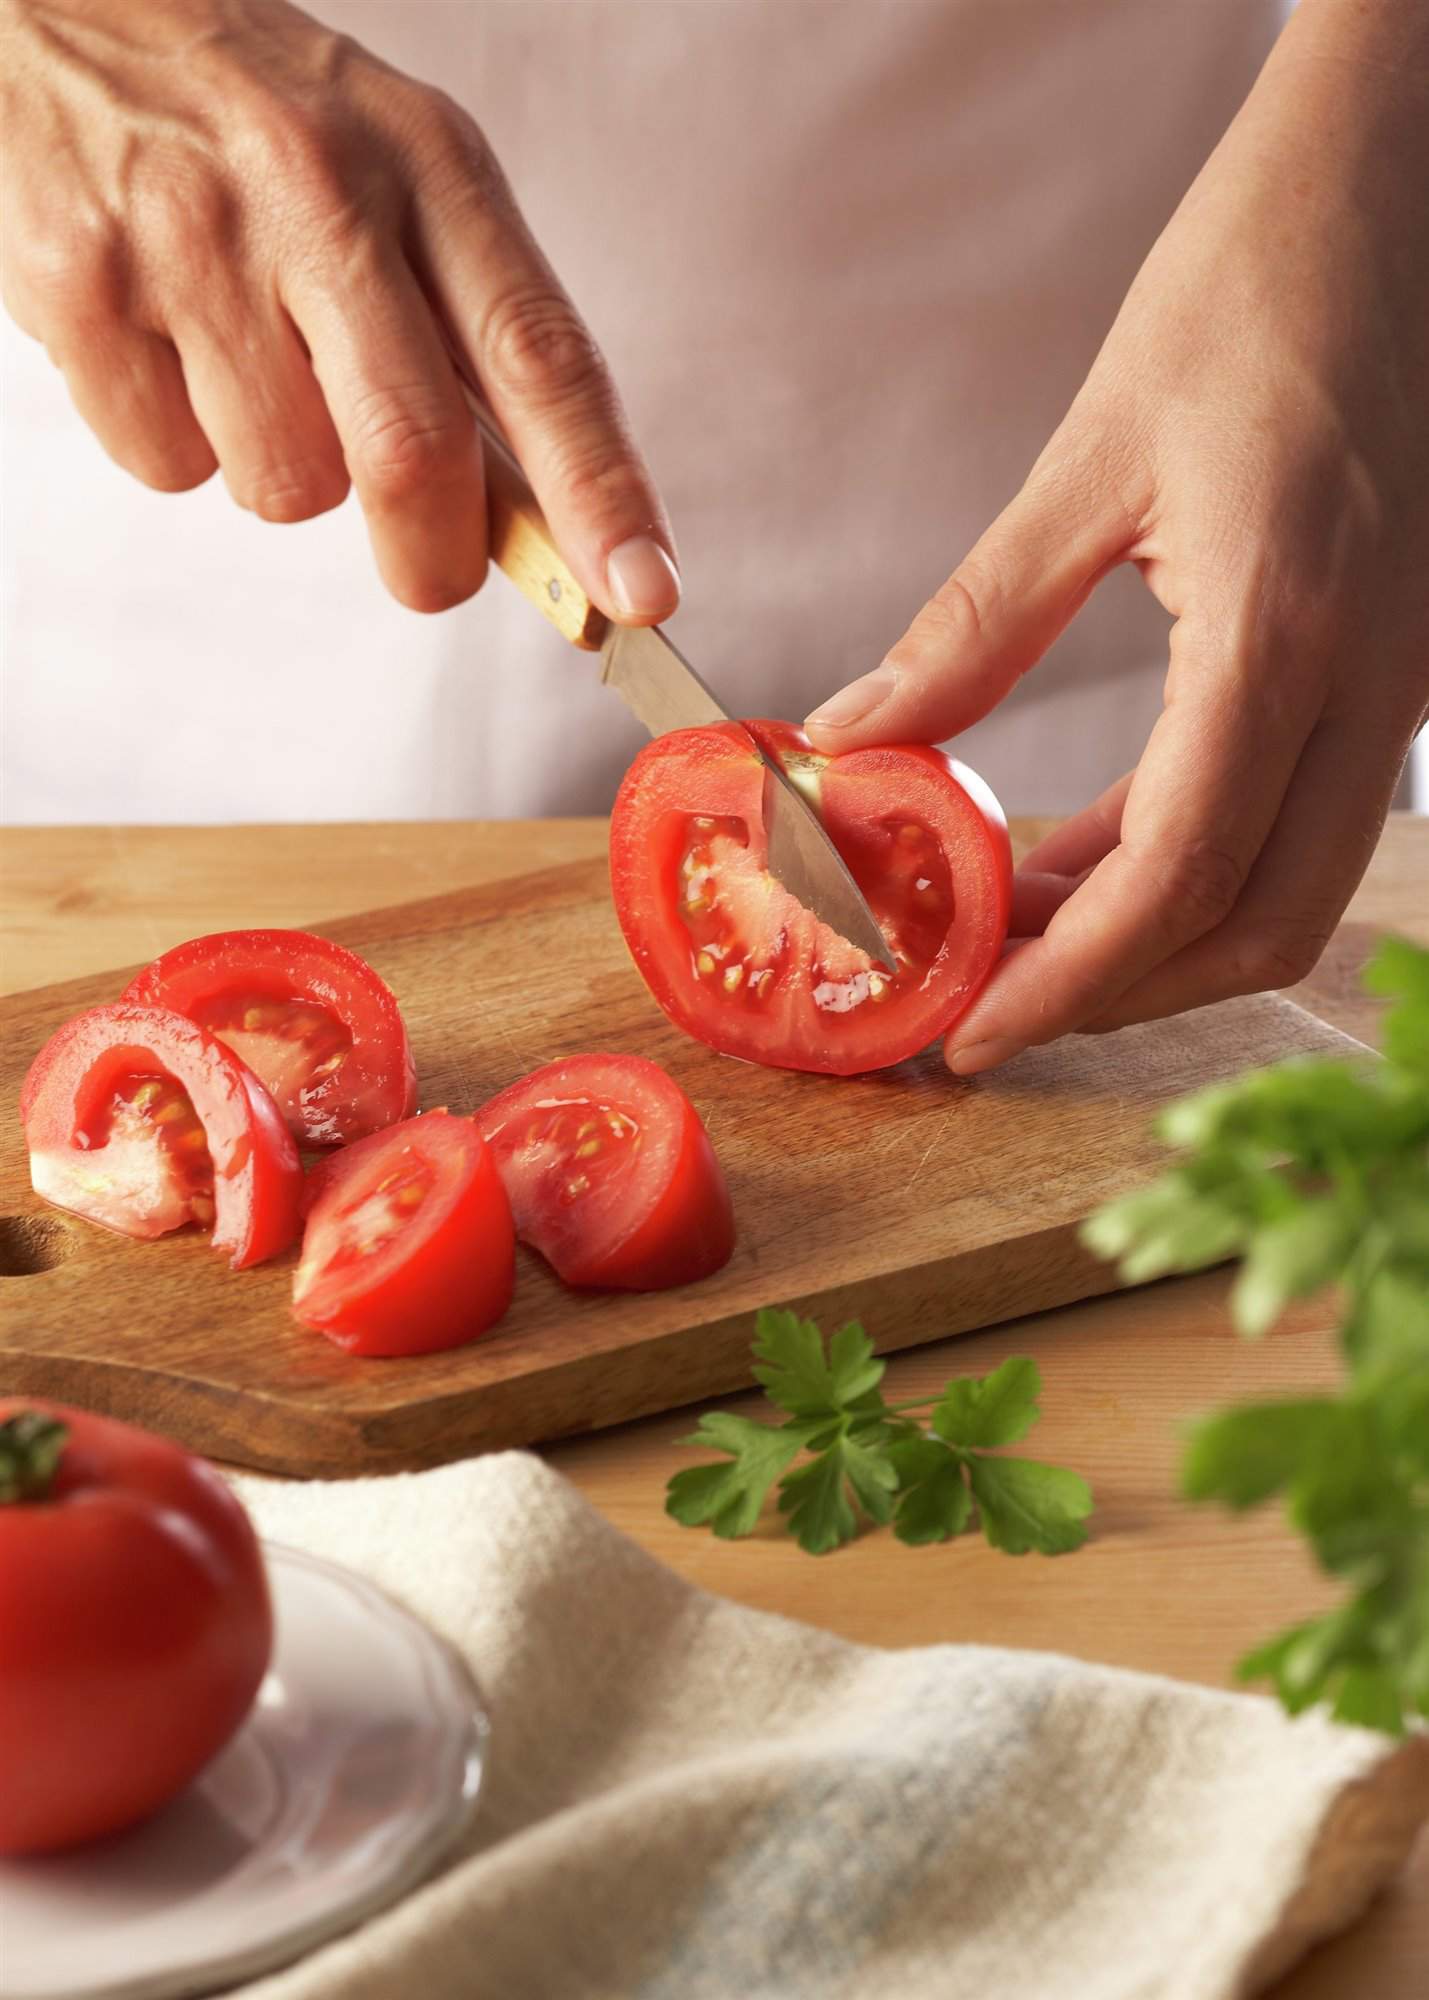 2. Trocea el tomate